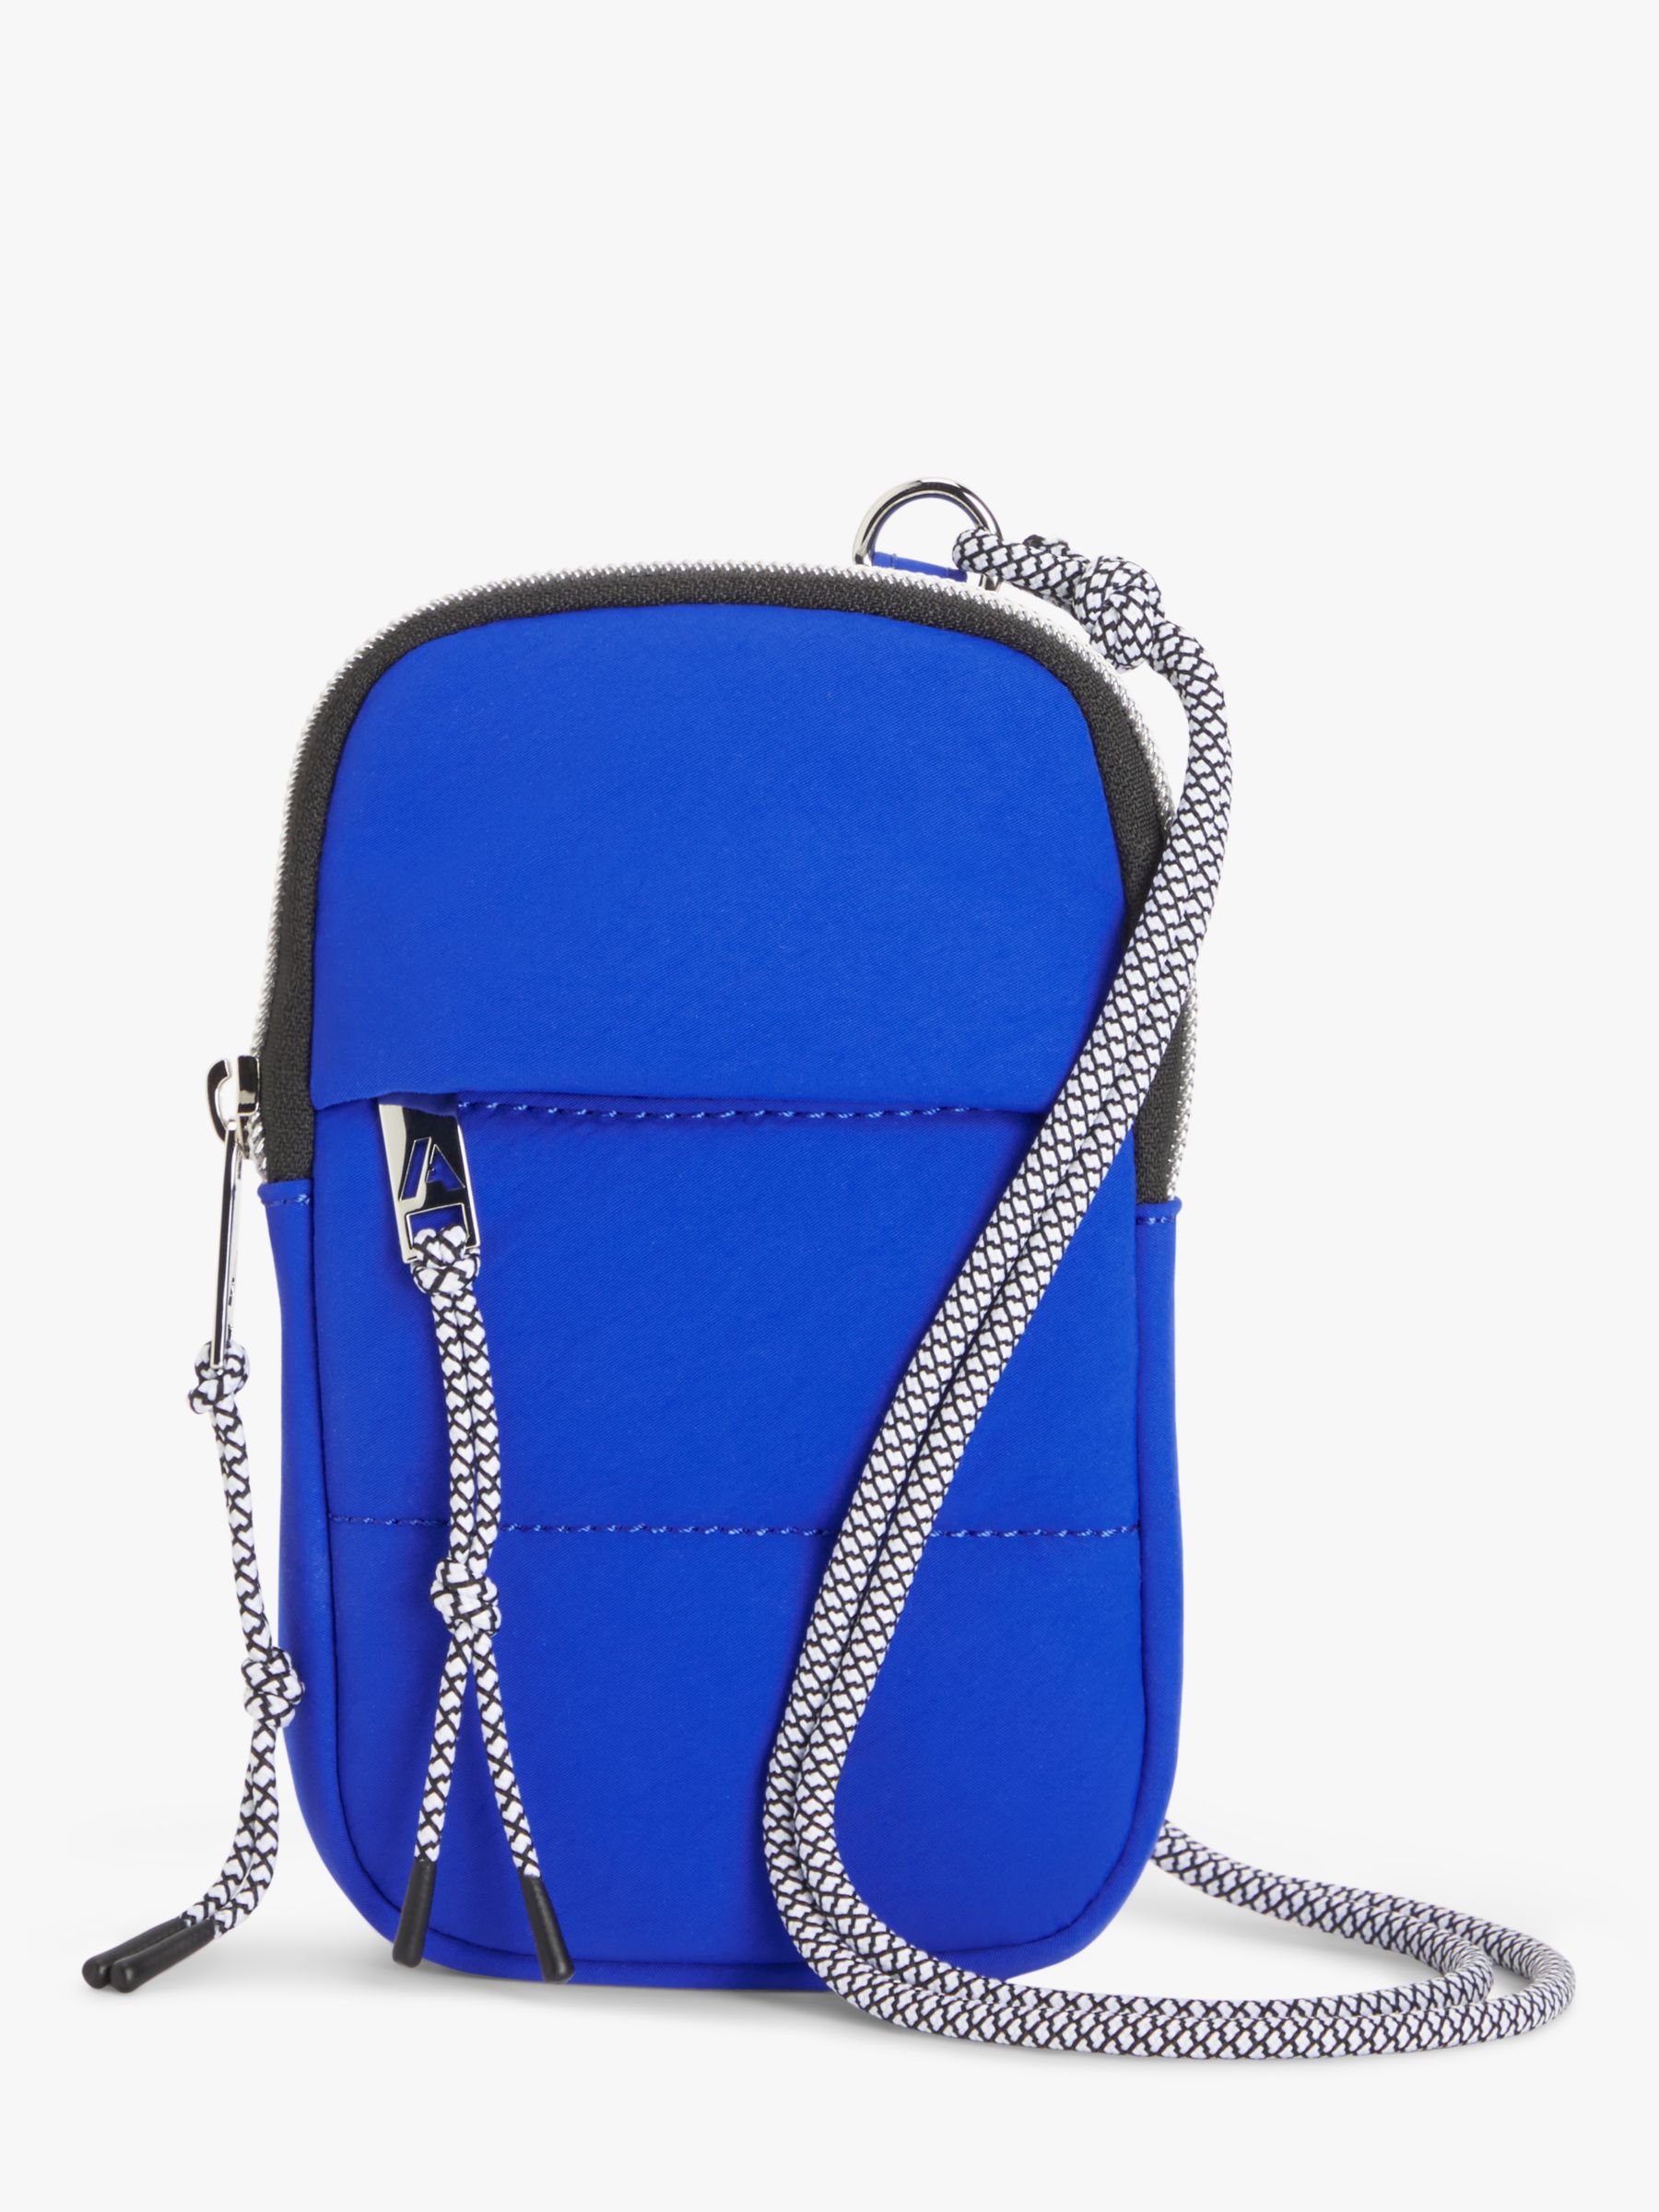 blue leather cross body bag unusual statement futuristic medium size